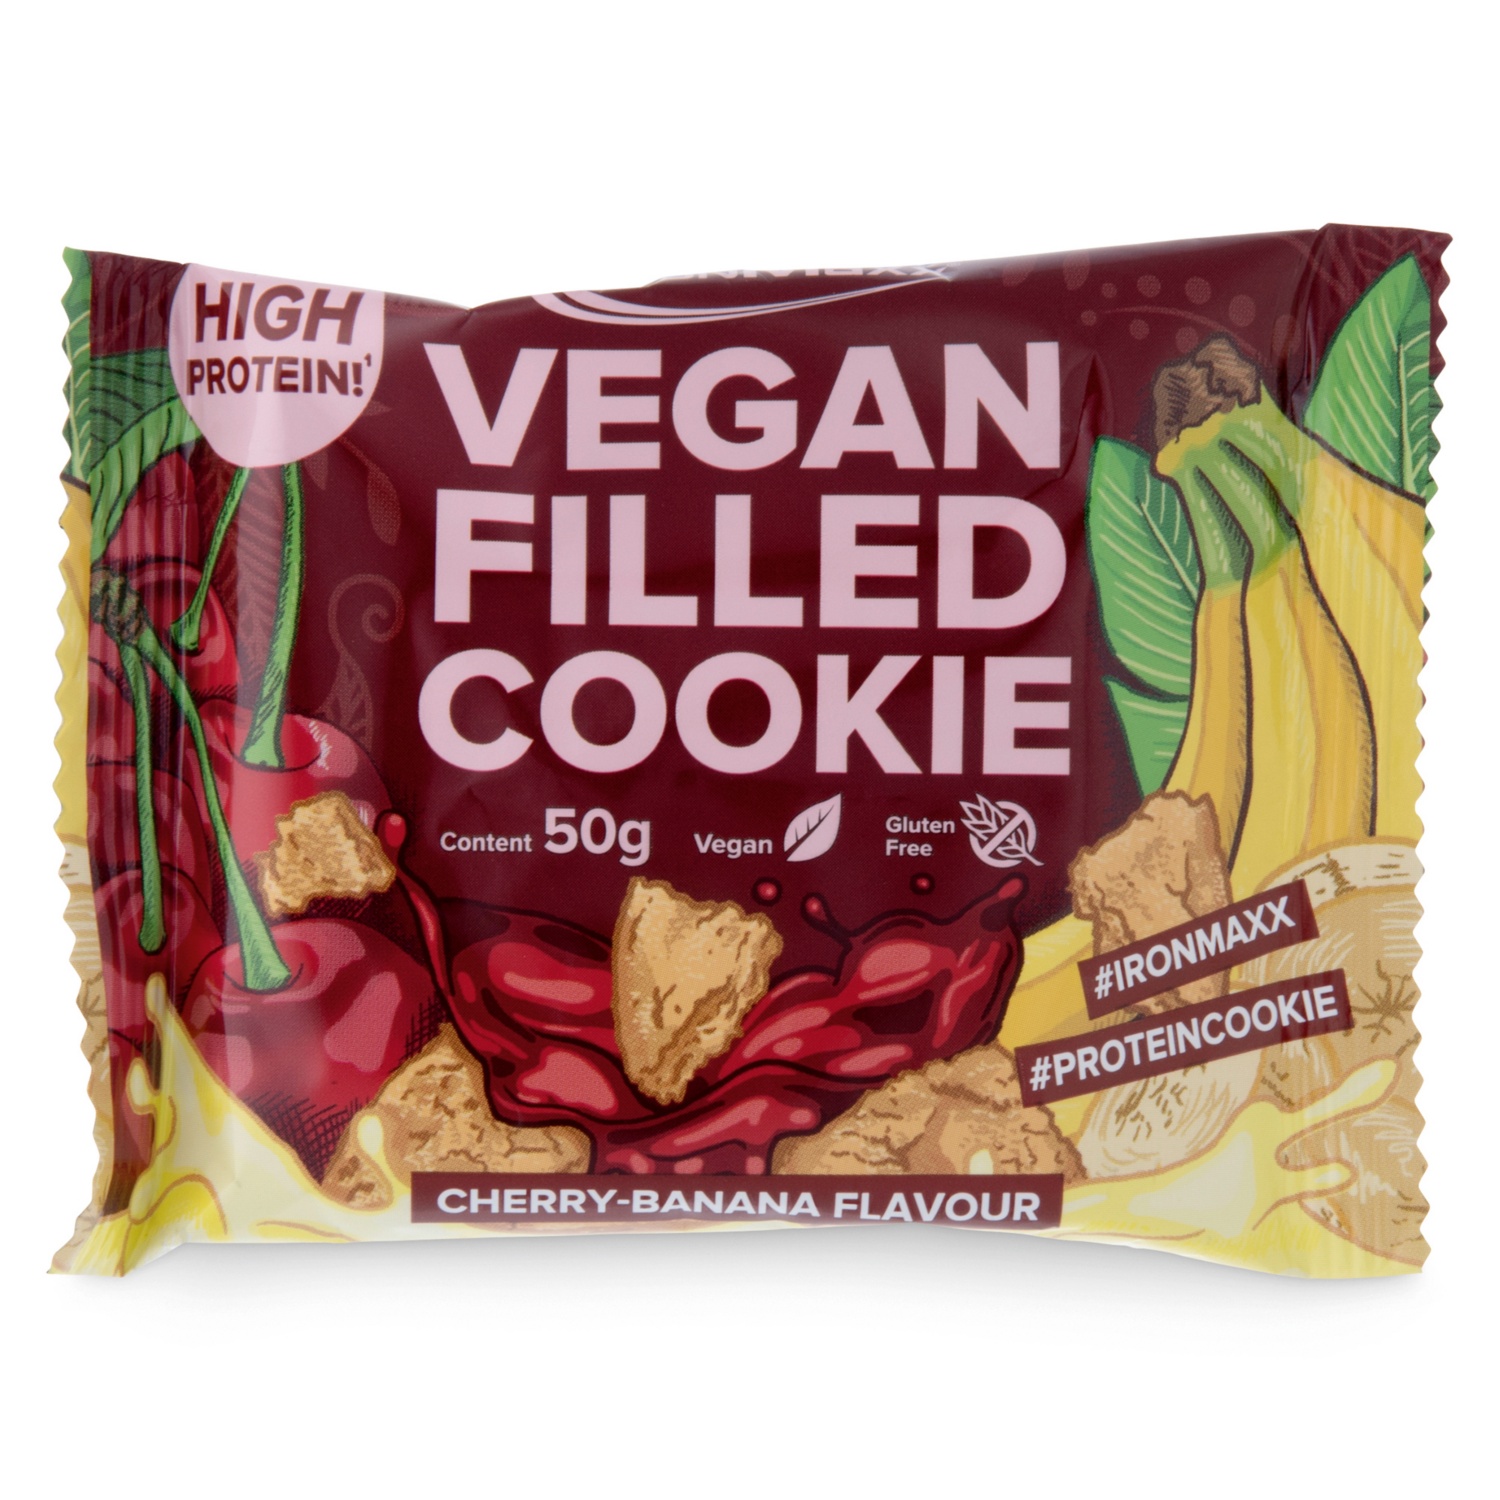 Vegan filled Cookie,Cherry-Banana